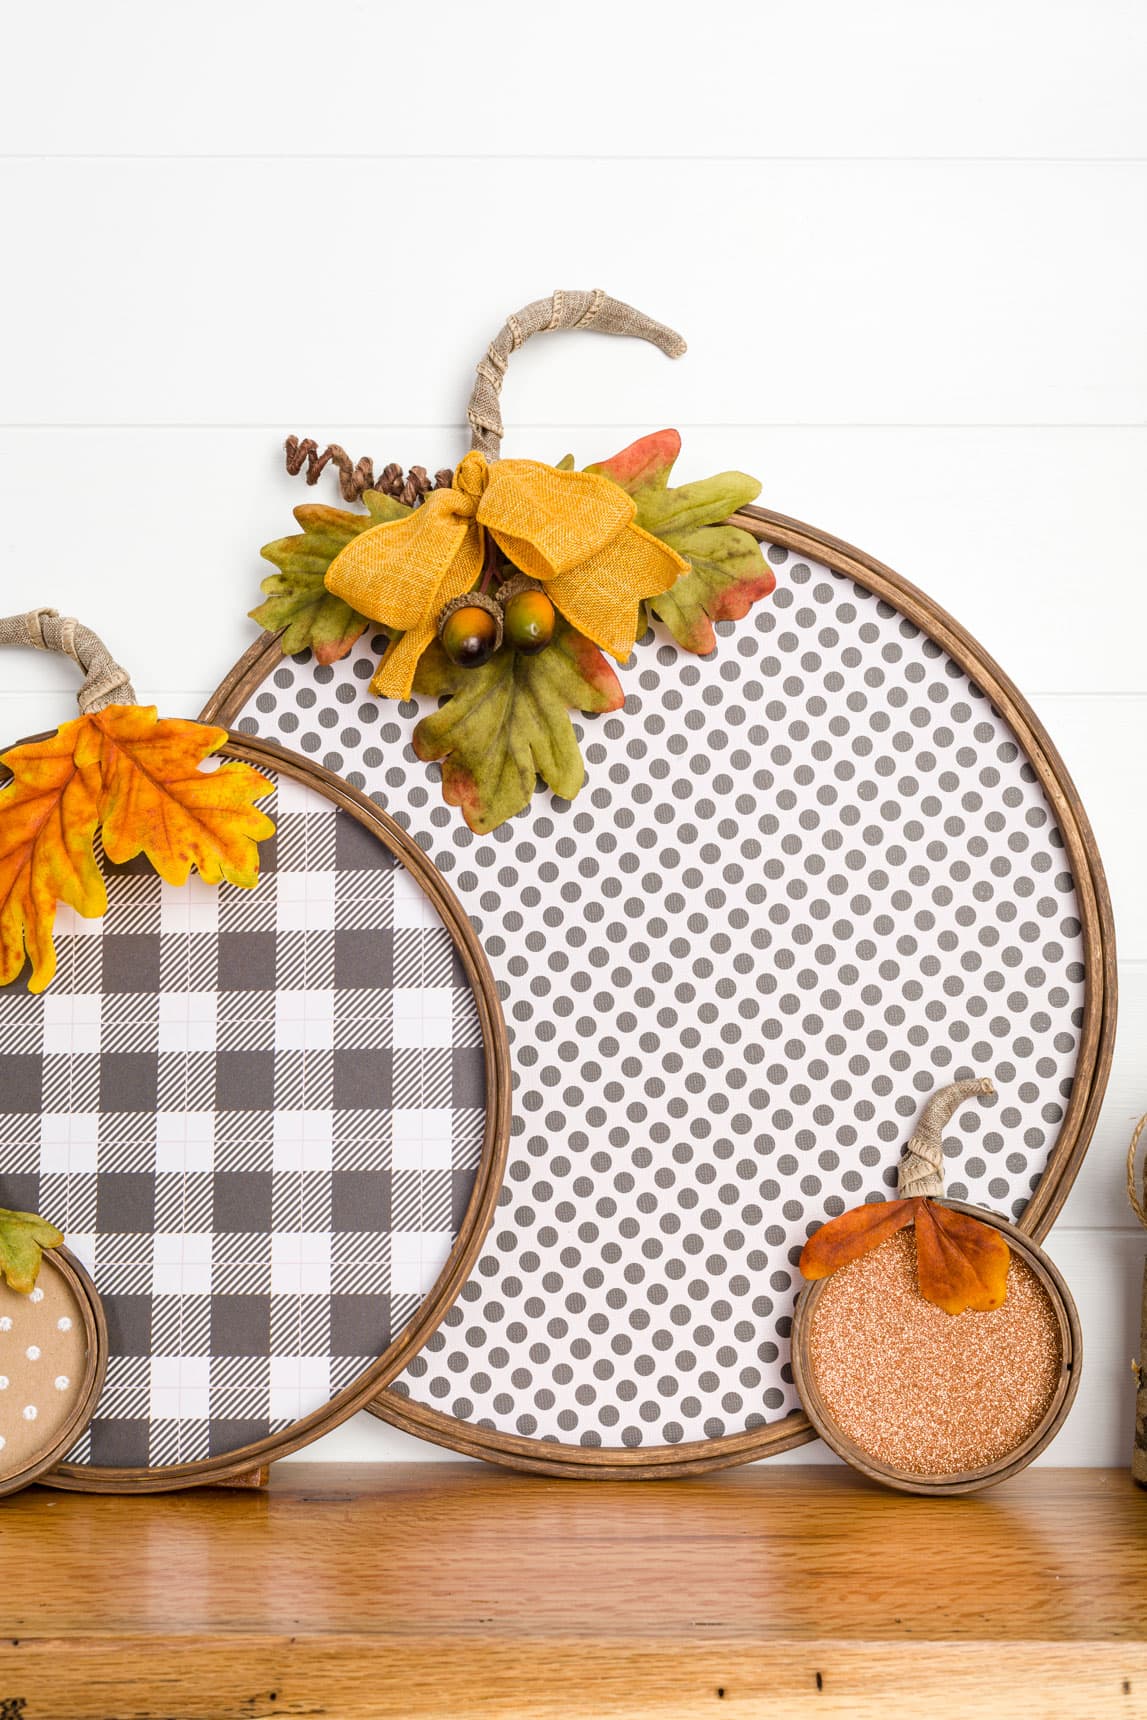 Fall paper hoop decorations that look like pumpkins in various patterns